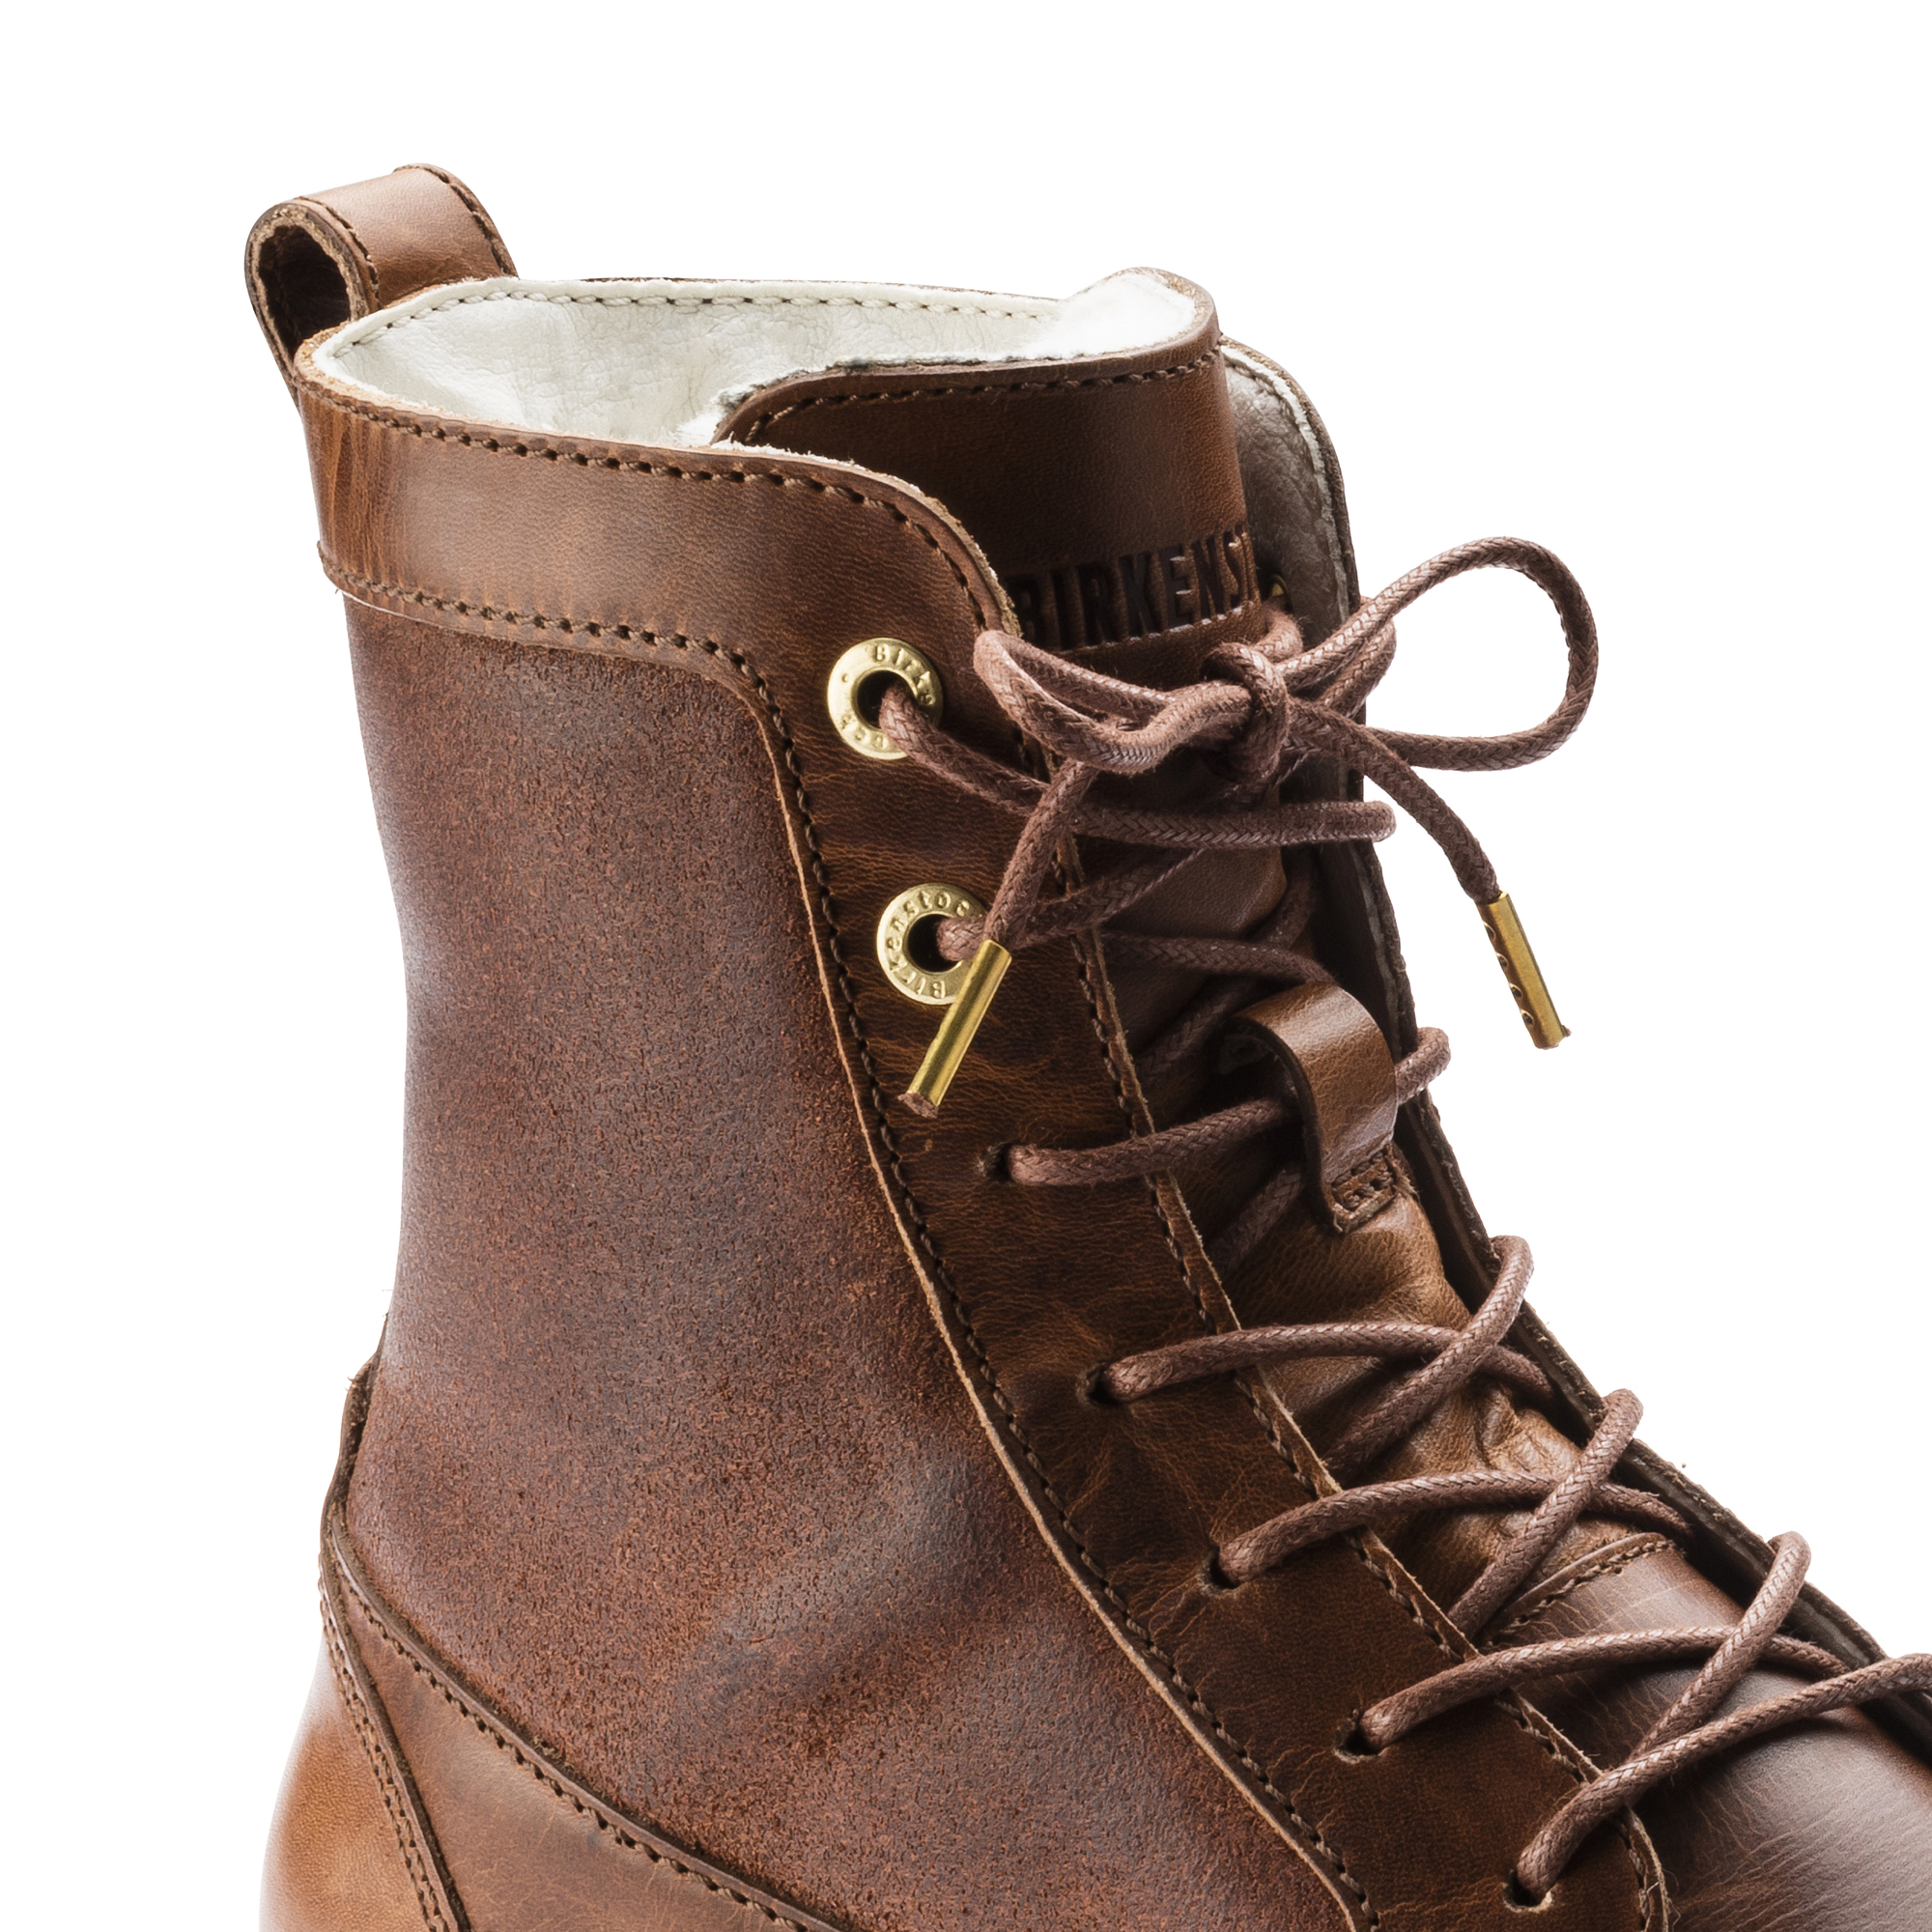 birkenstock gilford boots